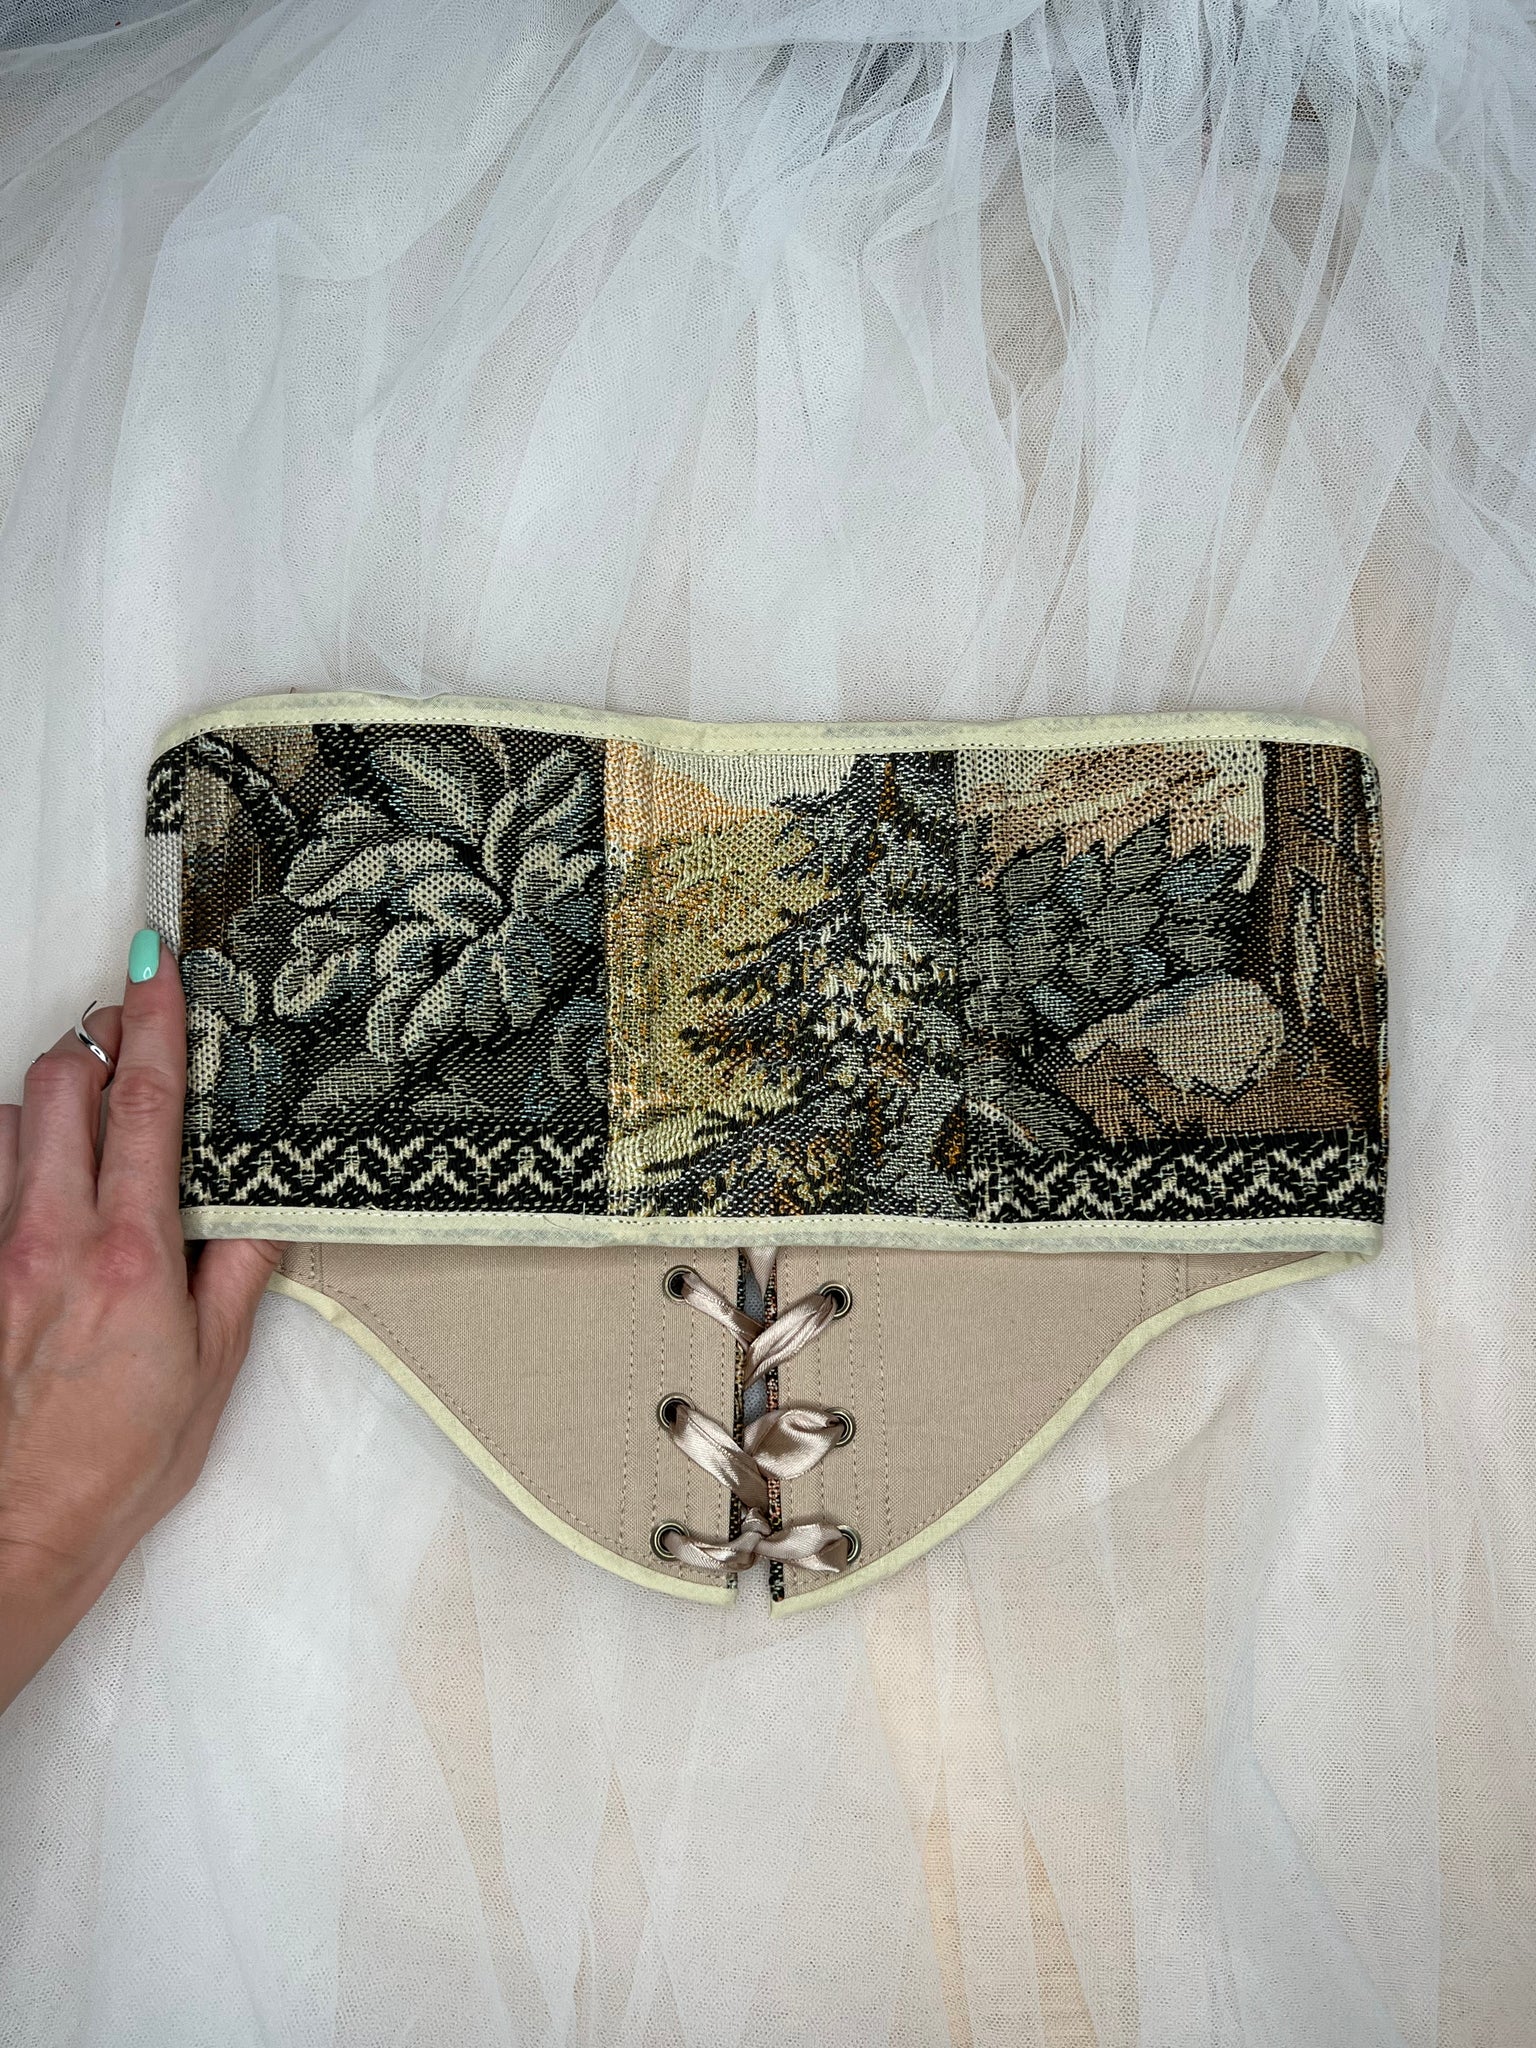 NEW Vintage Tapestry Lace-up Corset Belt, “Deer Scene” pattern, Size S-M (US 2-8)